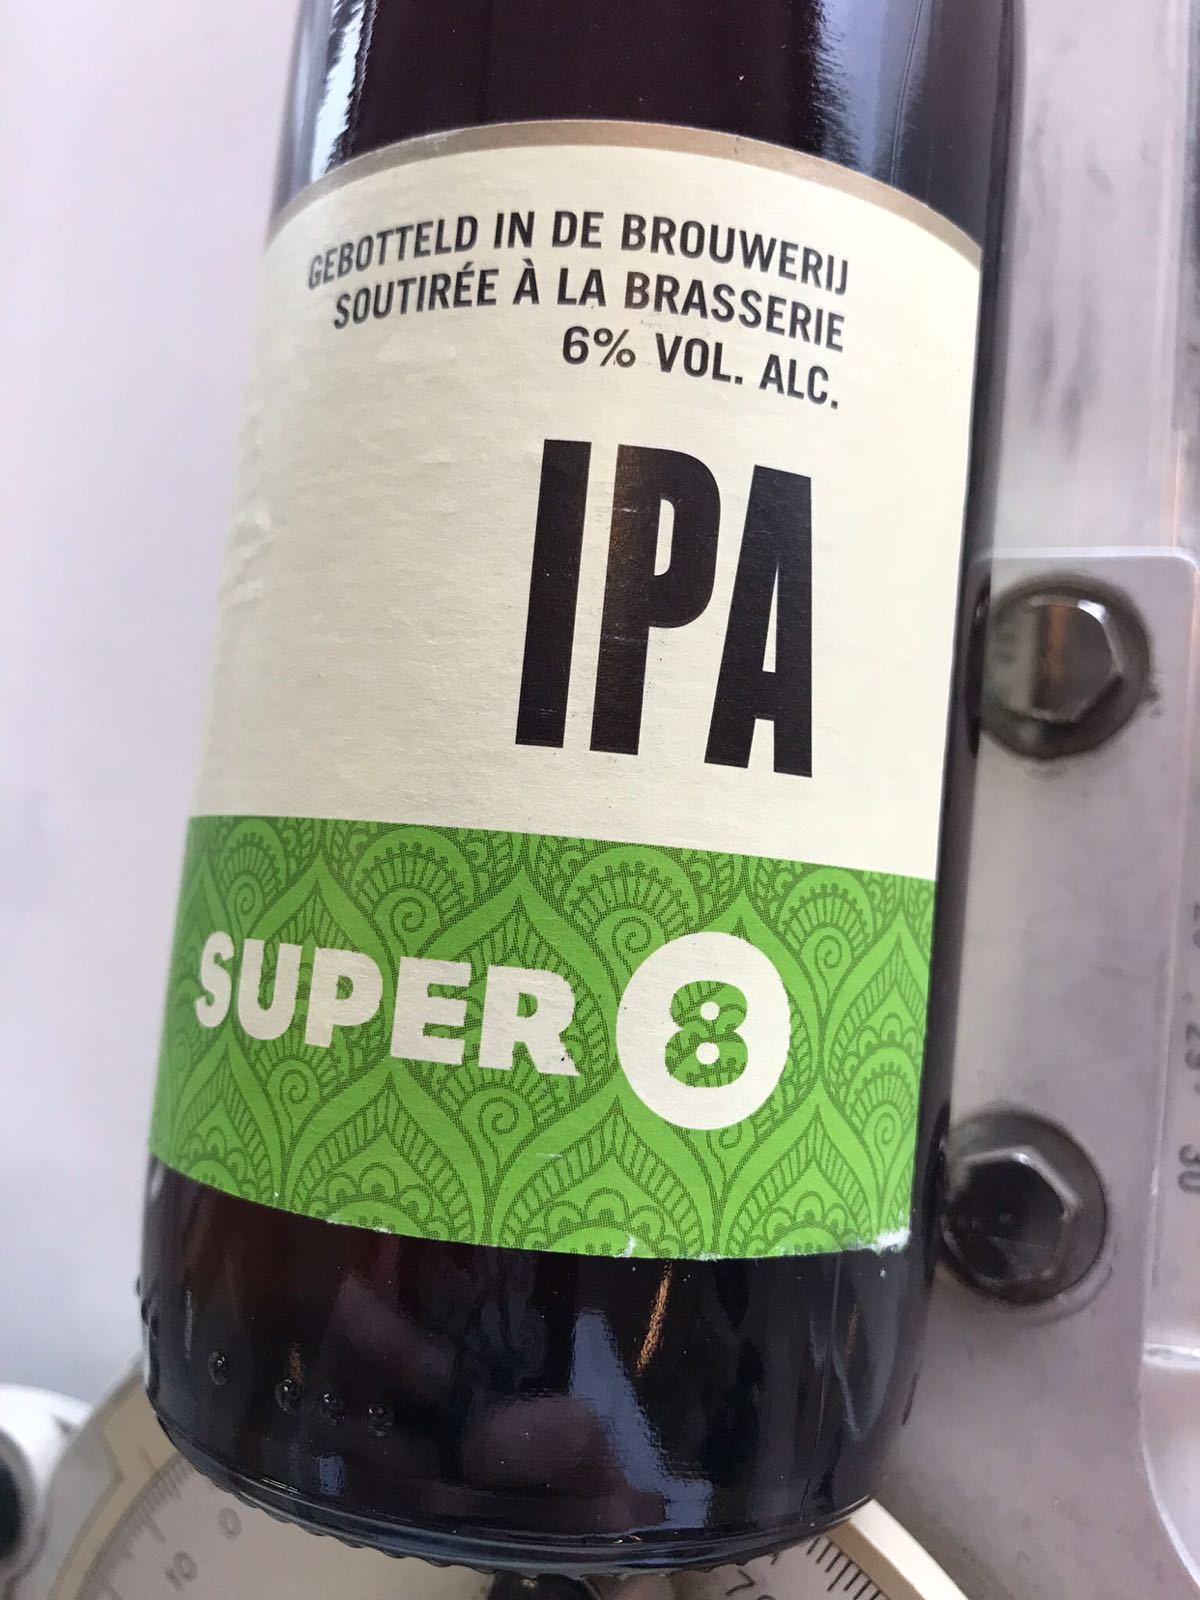 Super 8 IPA